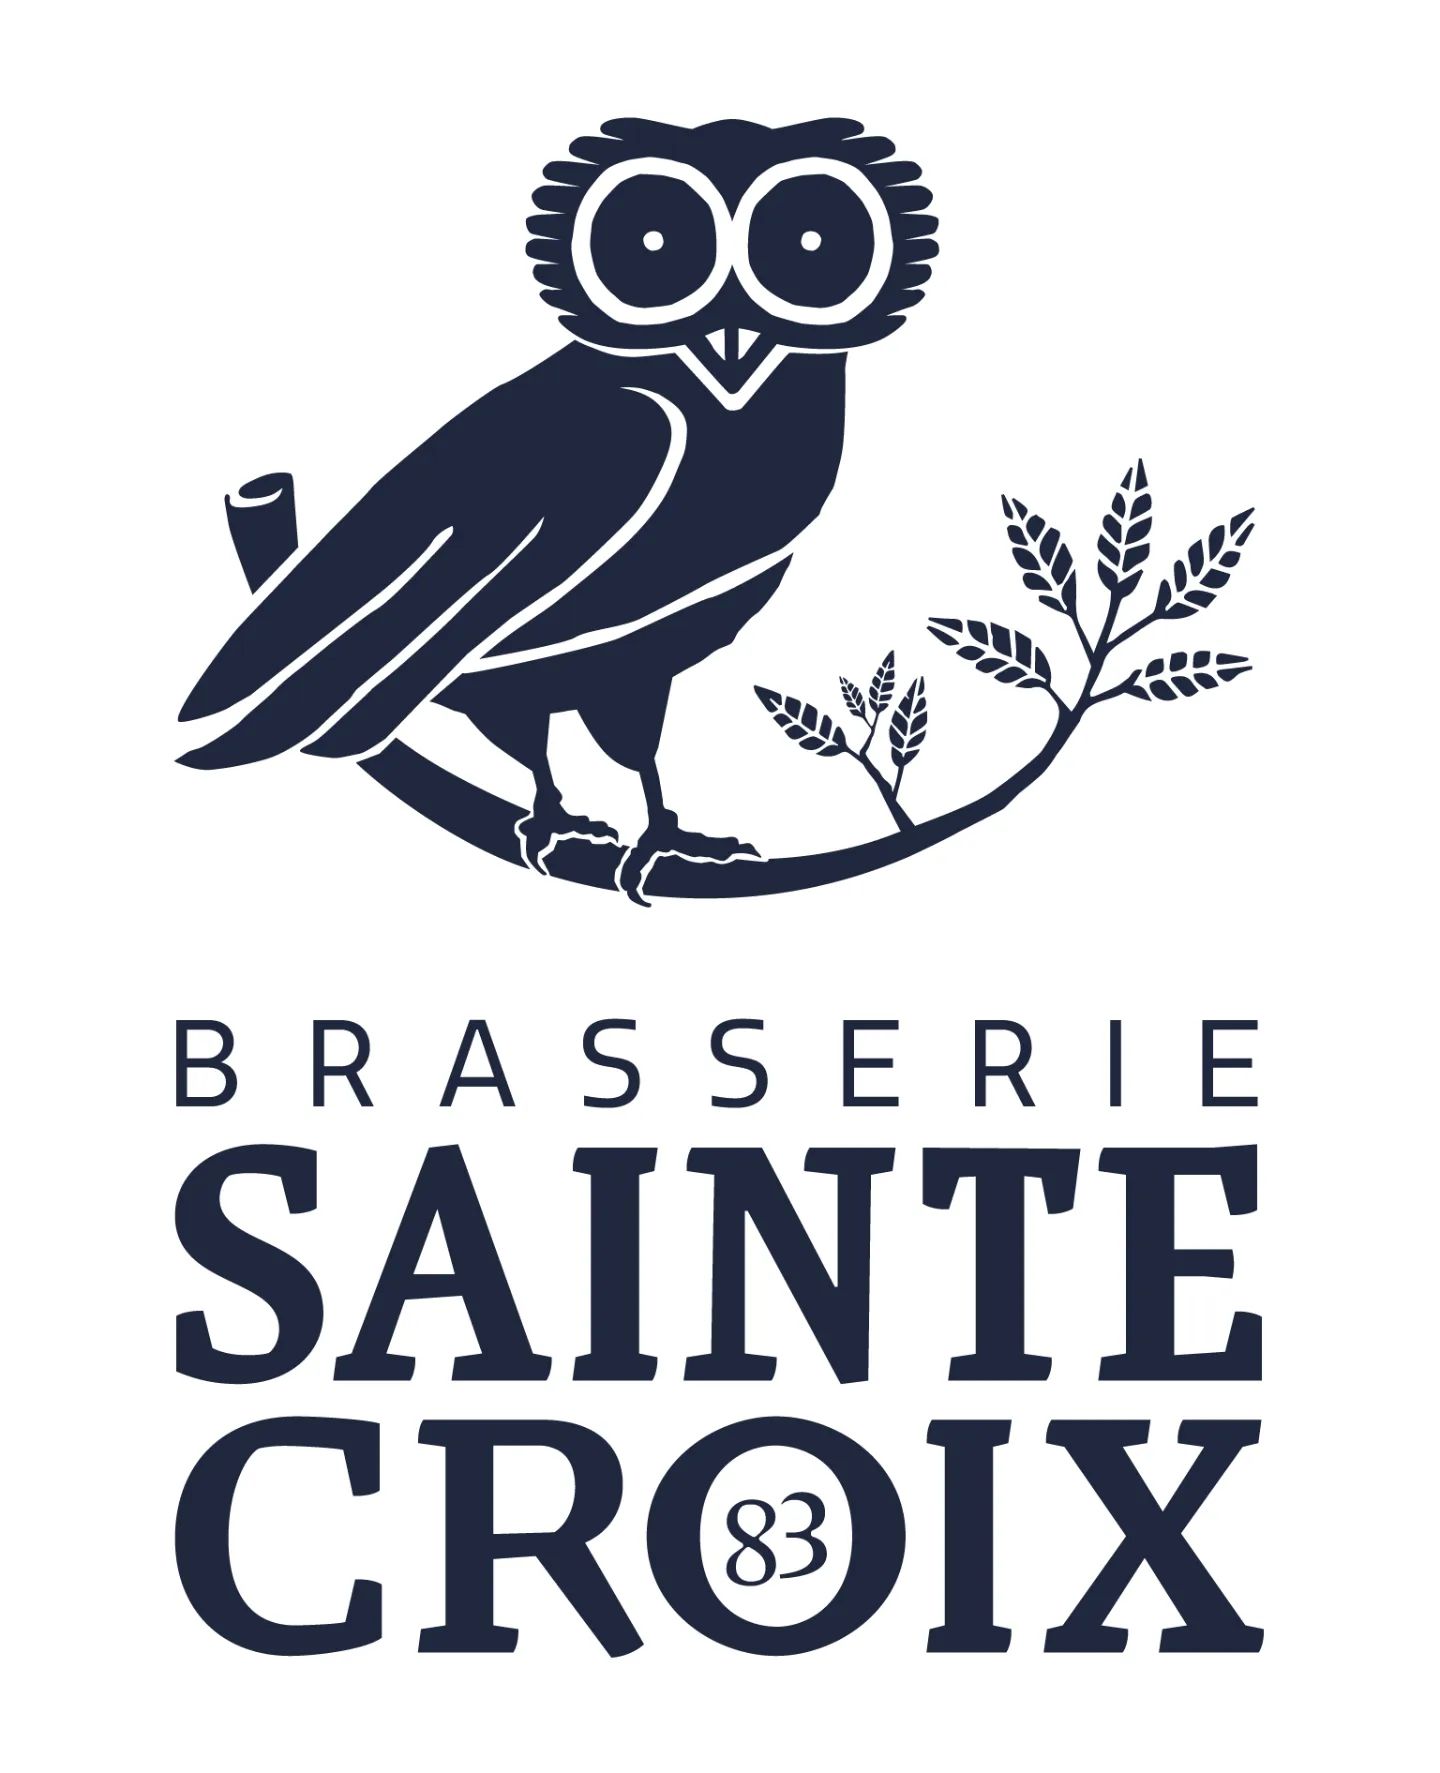 Photo Brasserie Sainte Croix 83